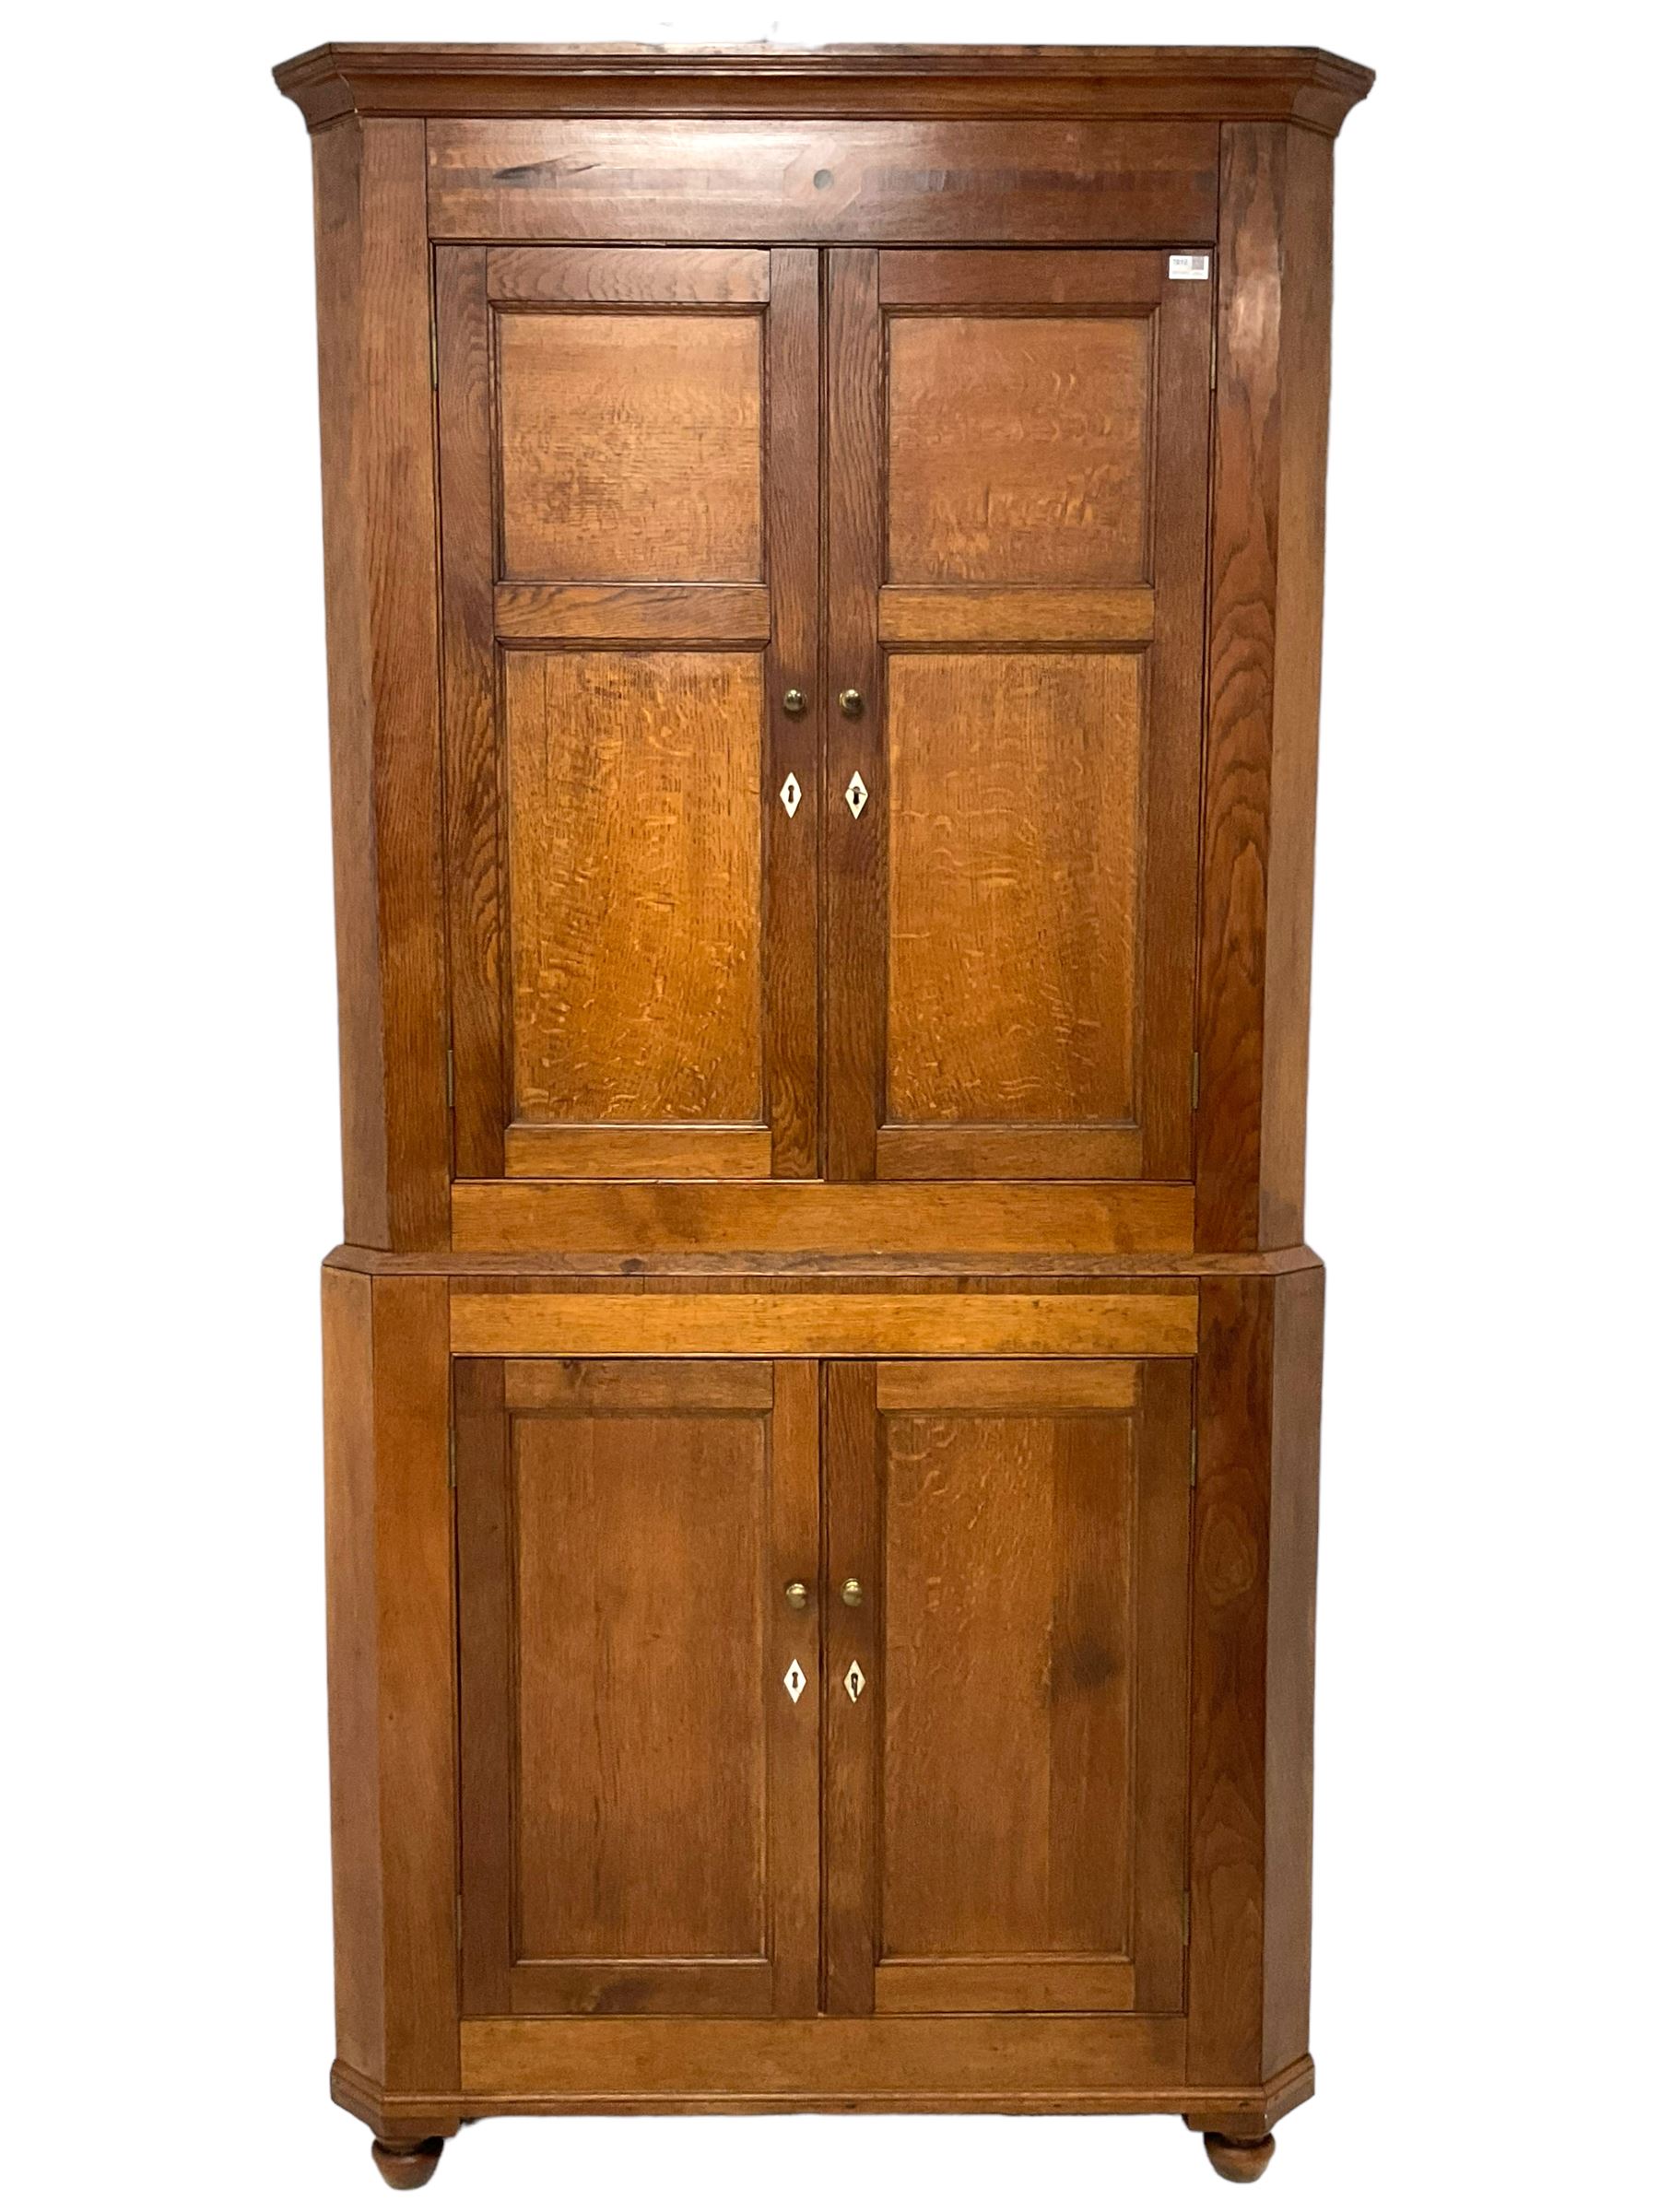 George III oak standing corner cupboard